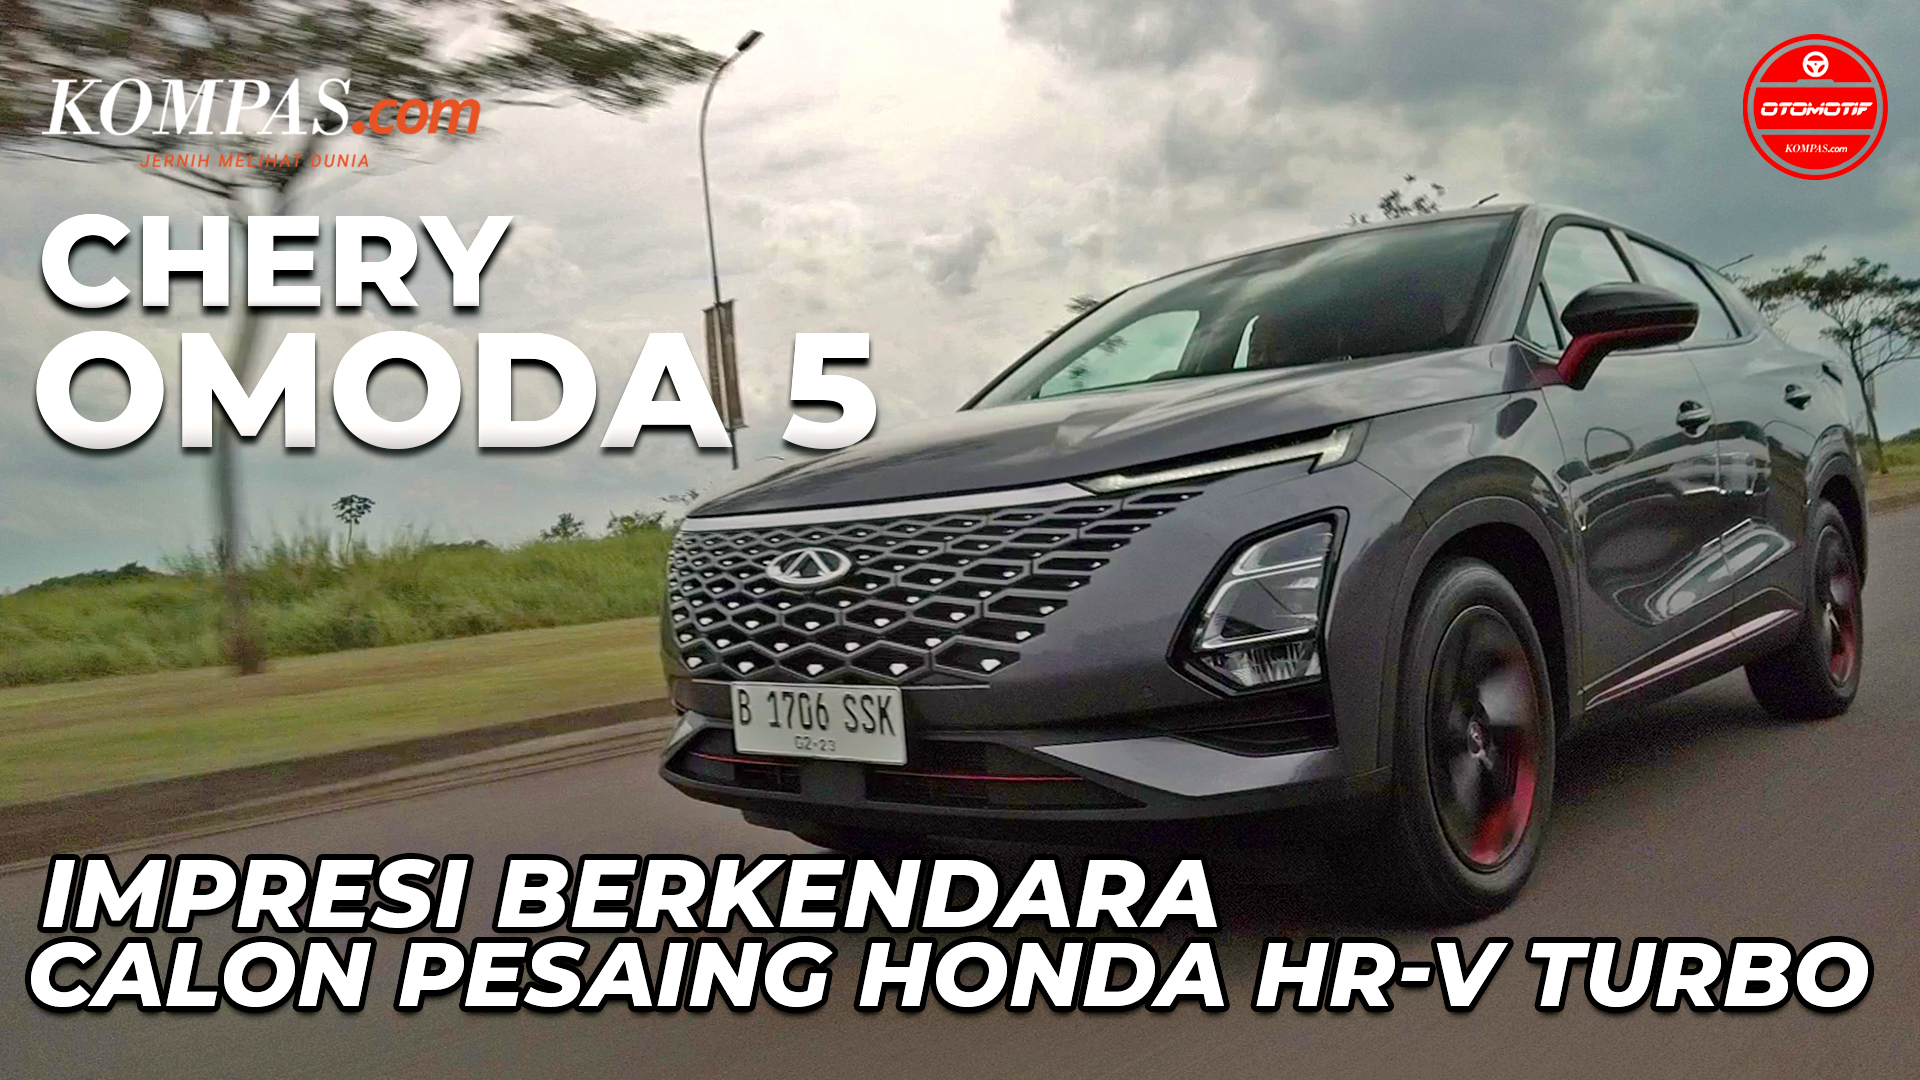 FIRST DRIVE | Chery Omoda 5 | Impresi Berkendara Calon Pesaing Honda HR-V Turbo